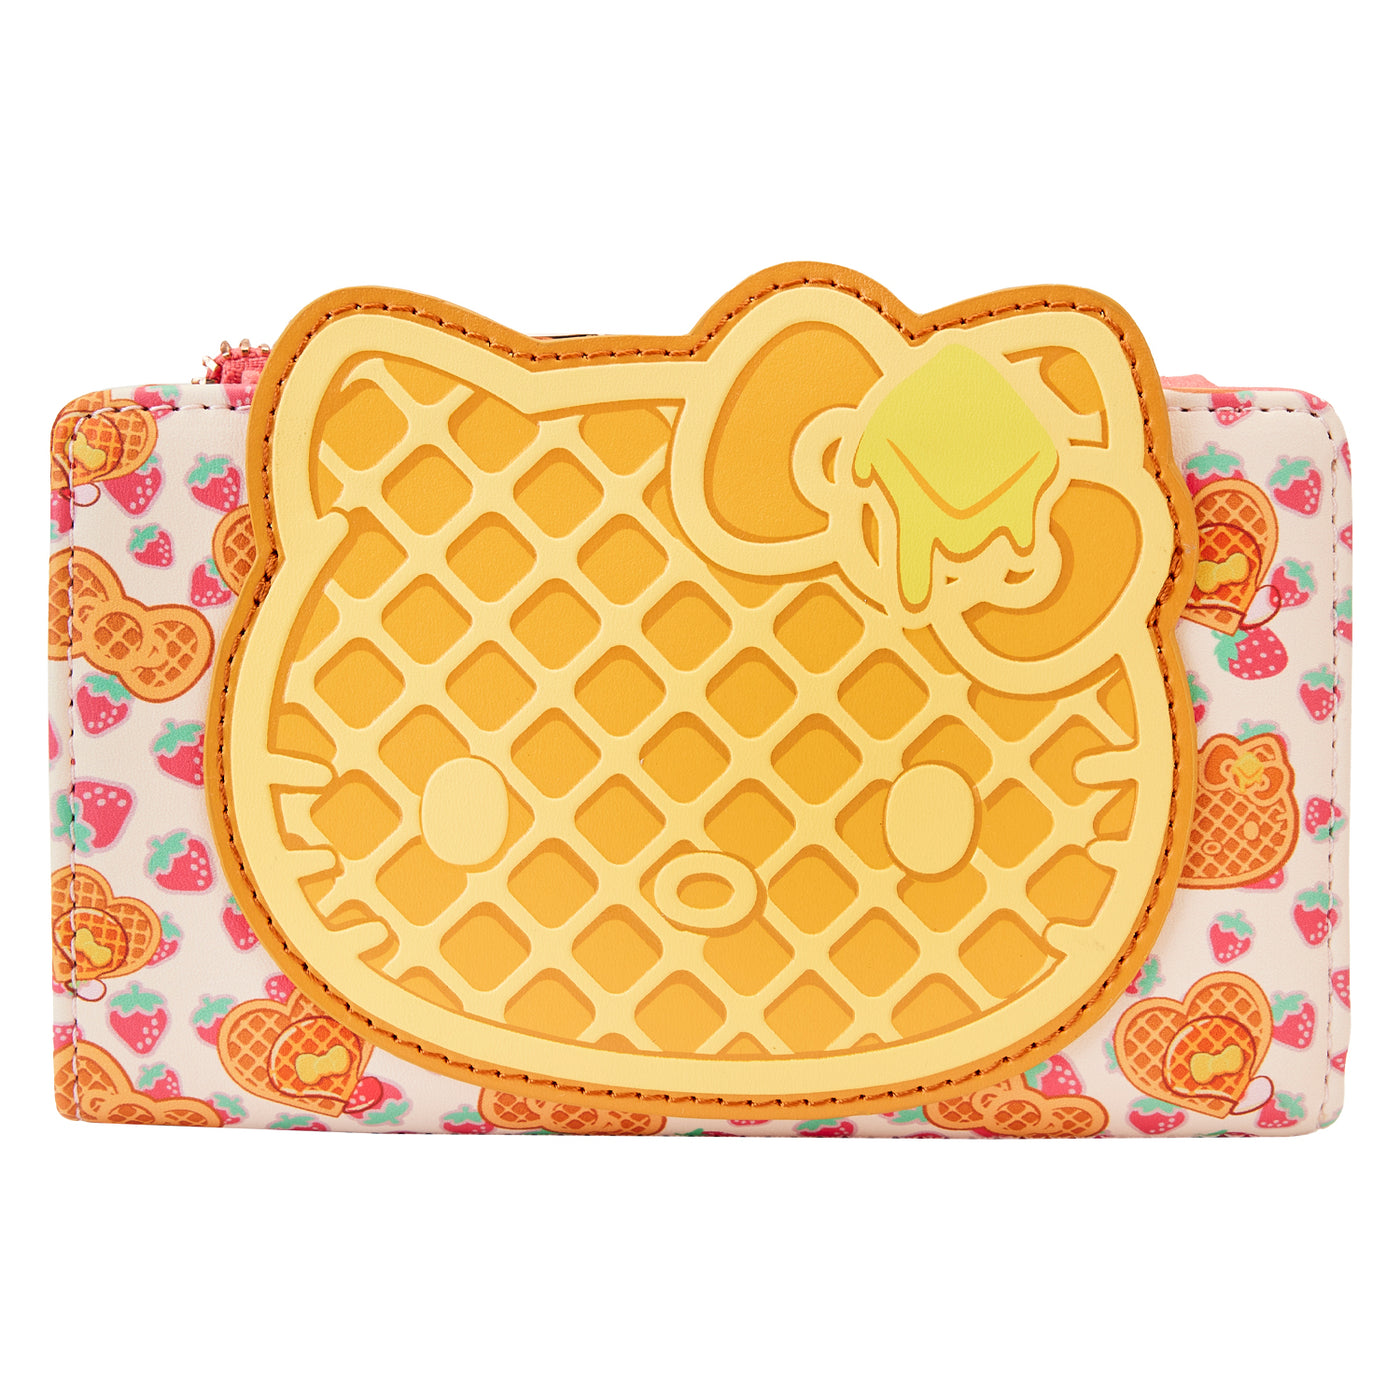 Sanrio Hello Kitty Breakfast Waffle Scented Wallet